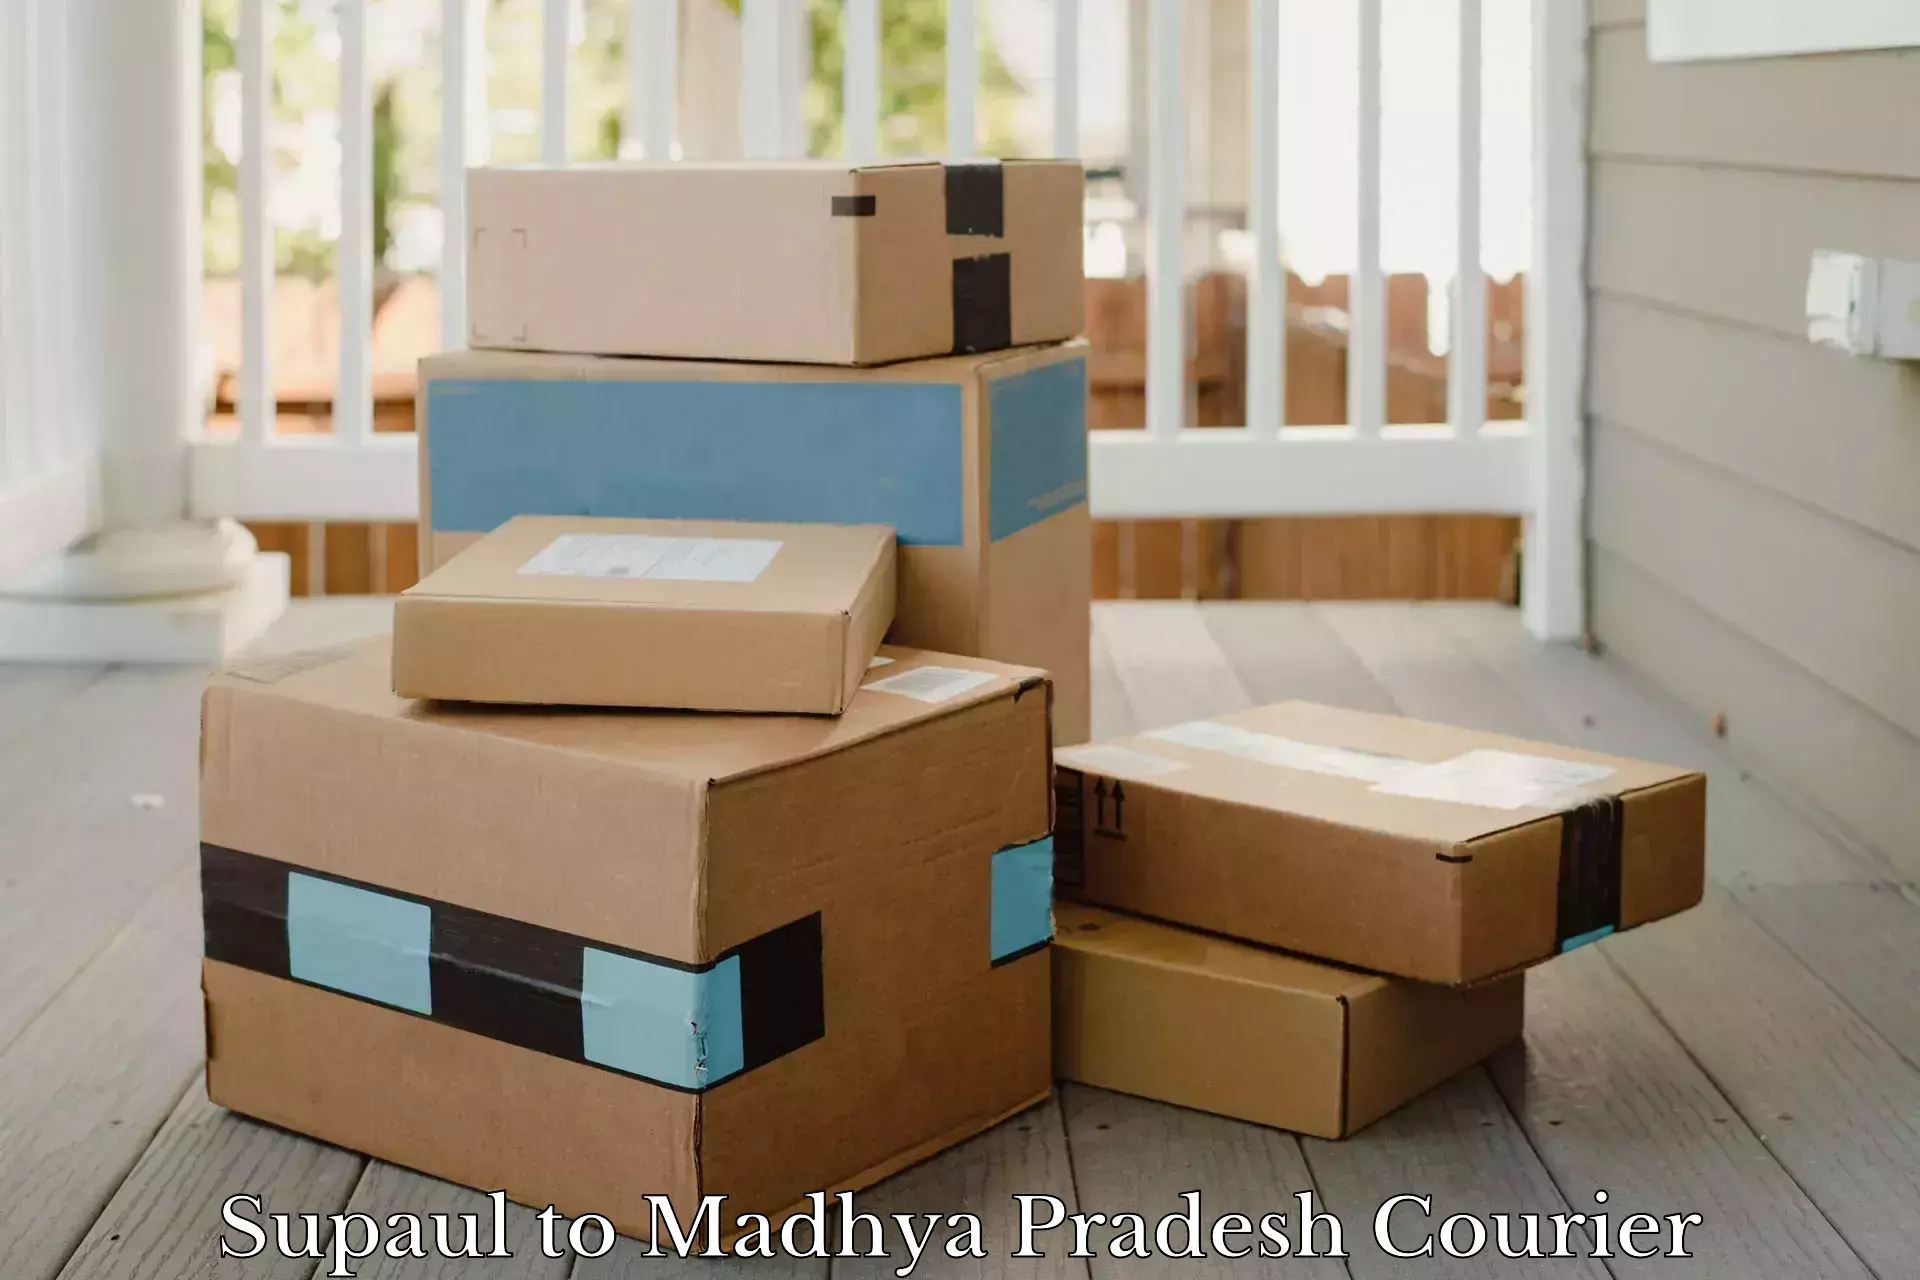 Supply chain delivery Supaul to Madhya Pradesh